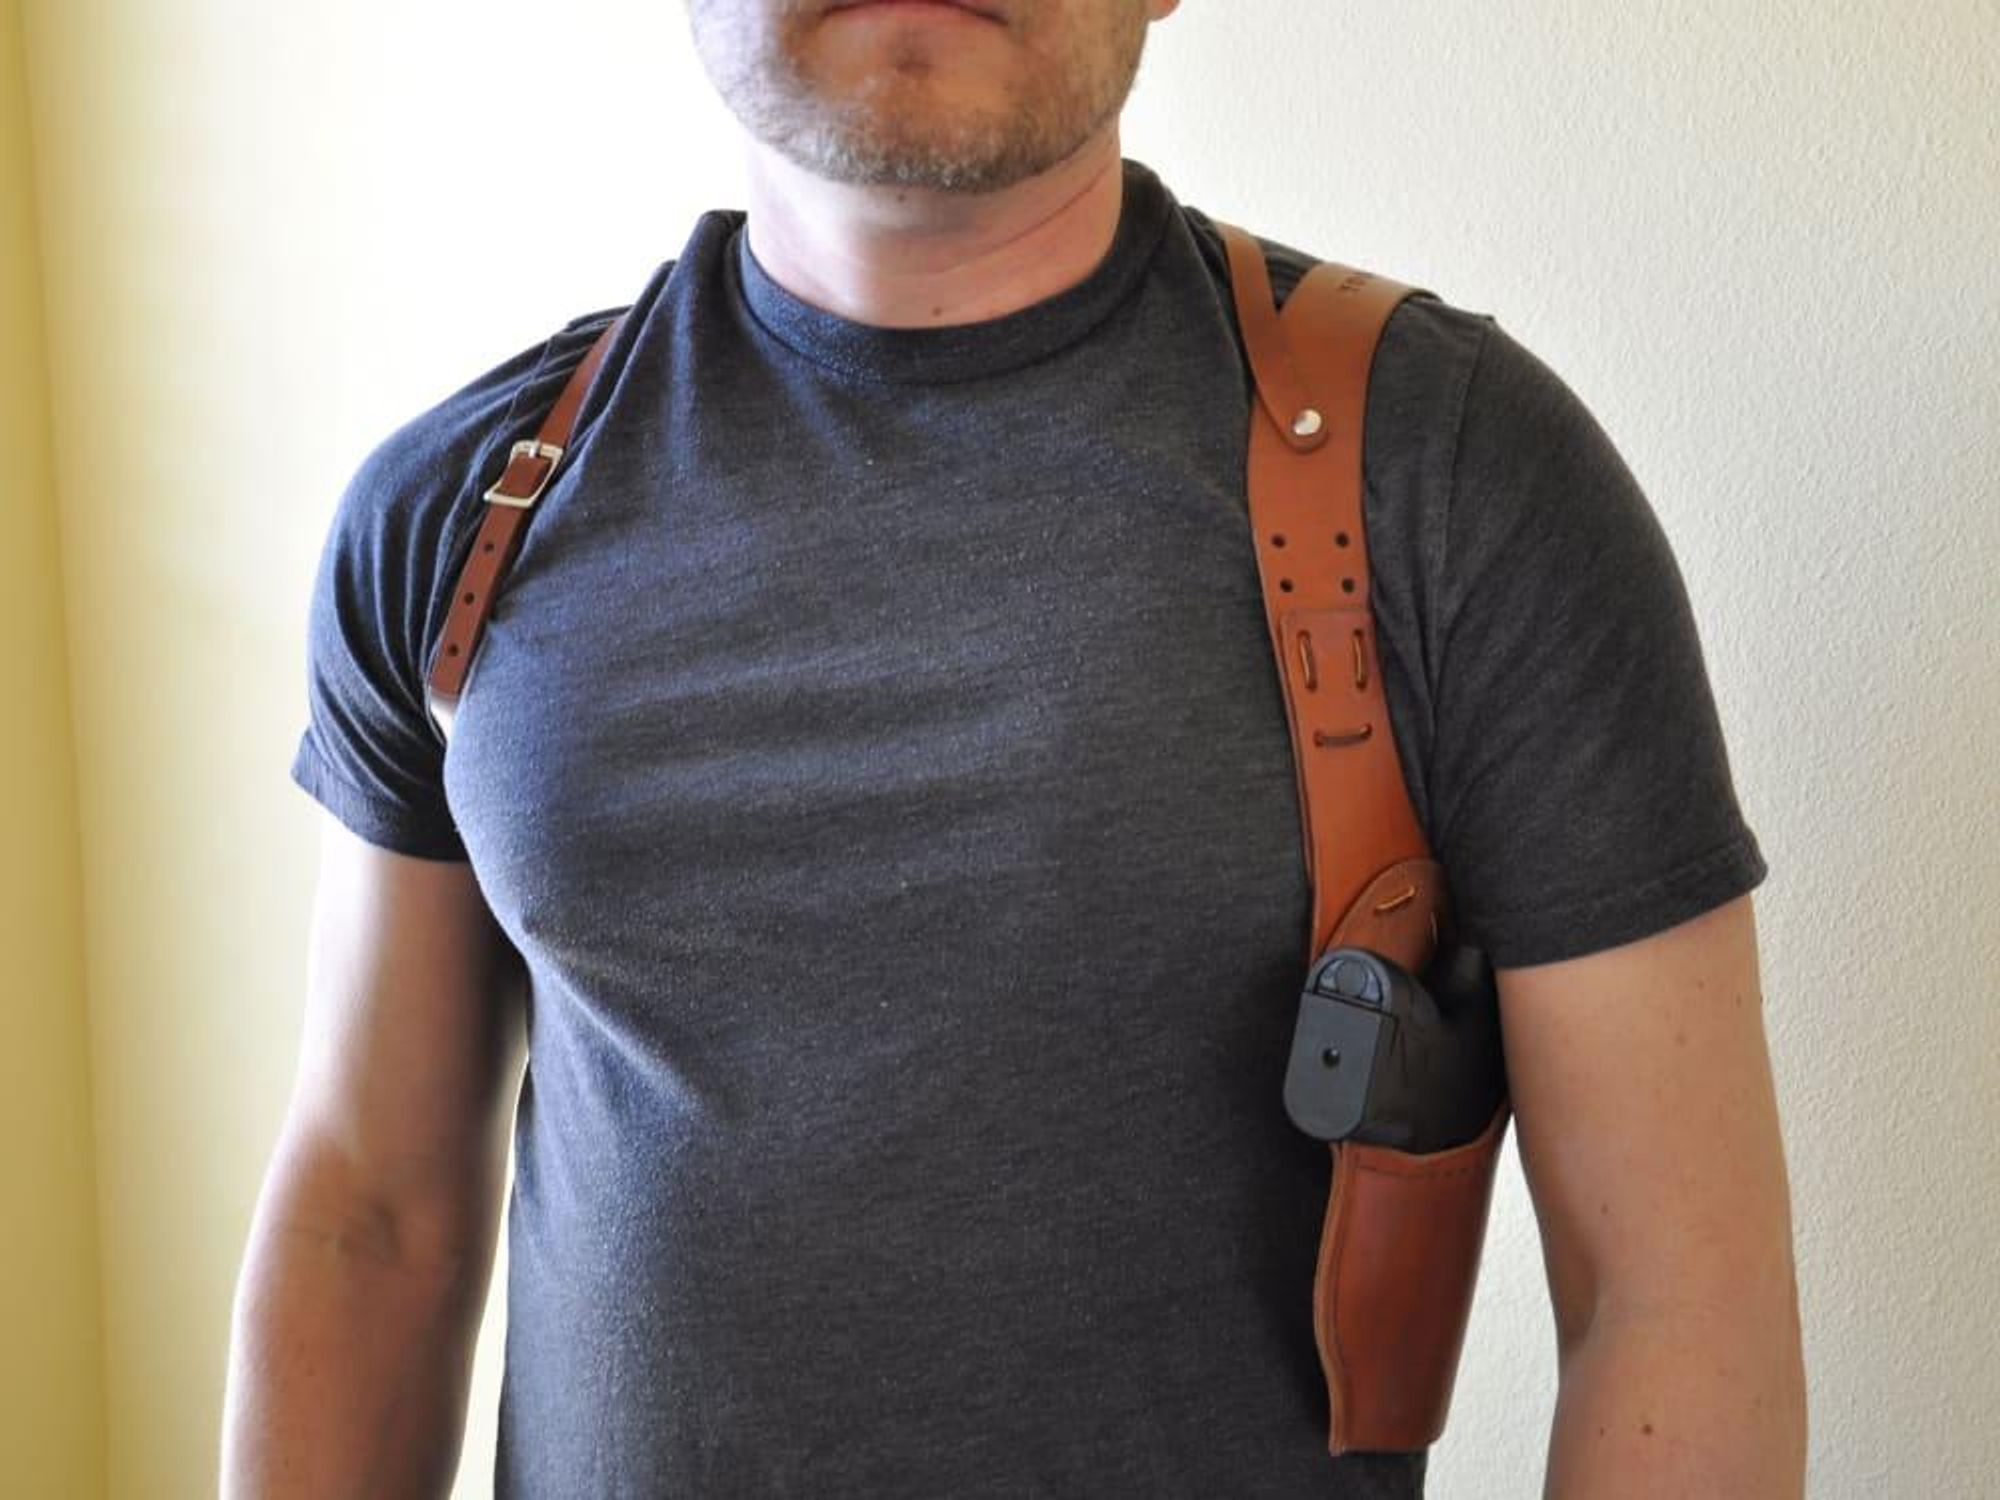 Man with pistol in shoulder holster